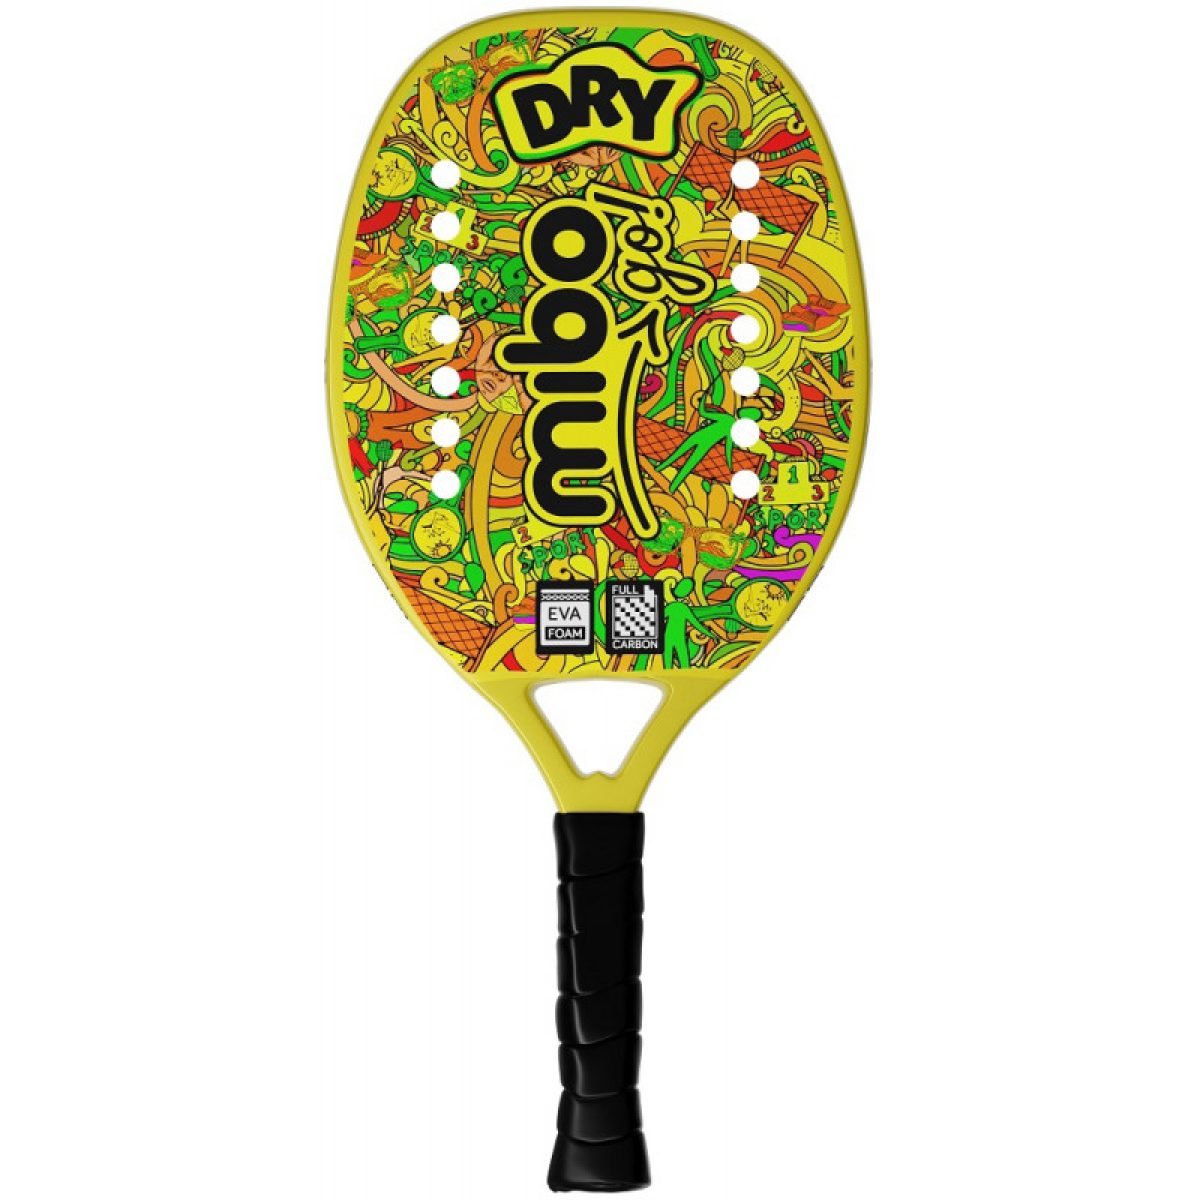 https://www.comprasnoparaguai.tur.br/wp-content/uploads/2022/04/raquete-de-beach-tennis-mibo-go-dry-1200x1200.jpg